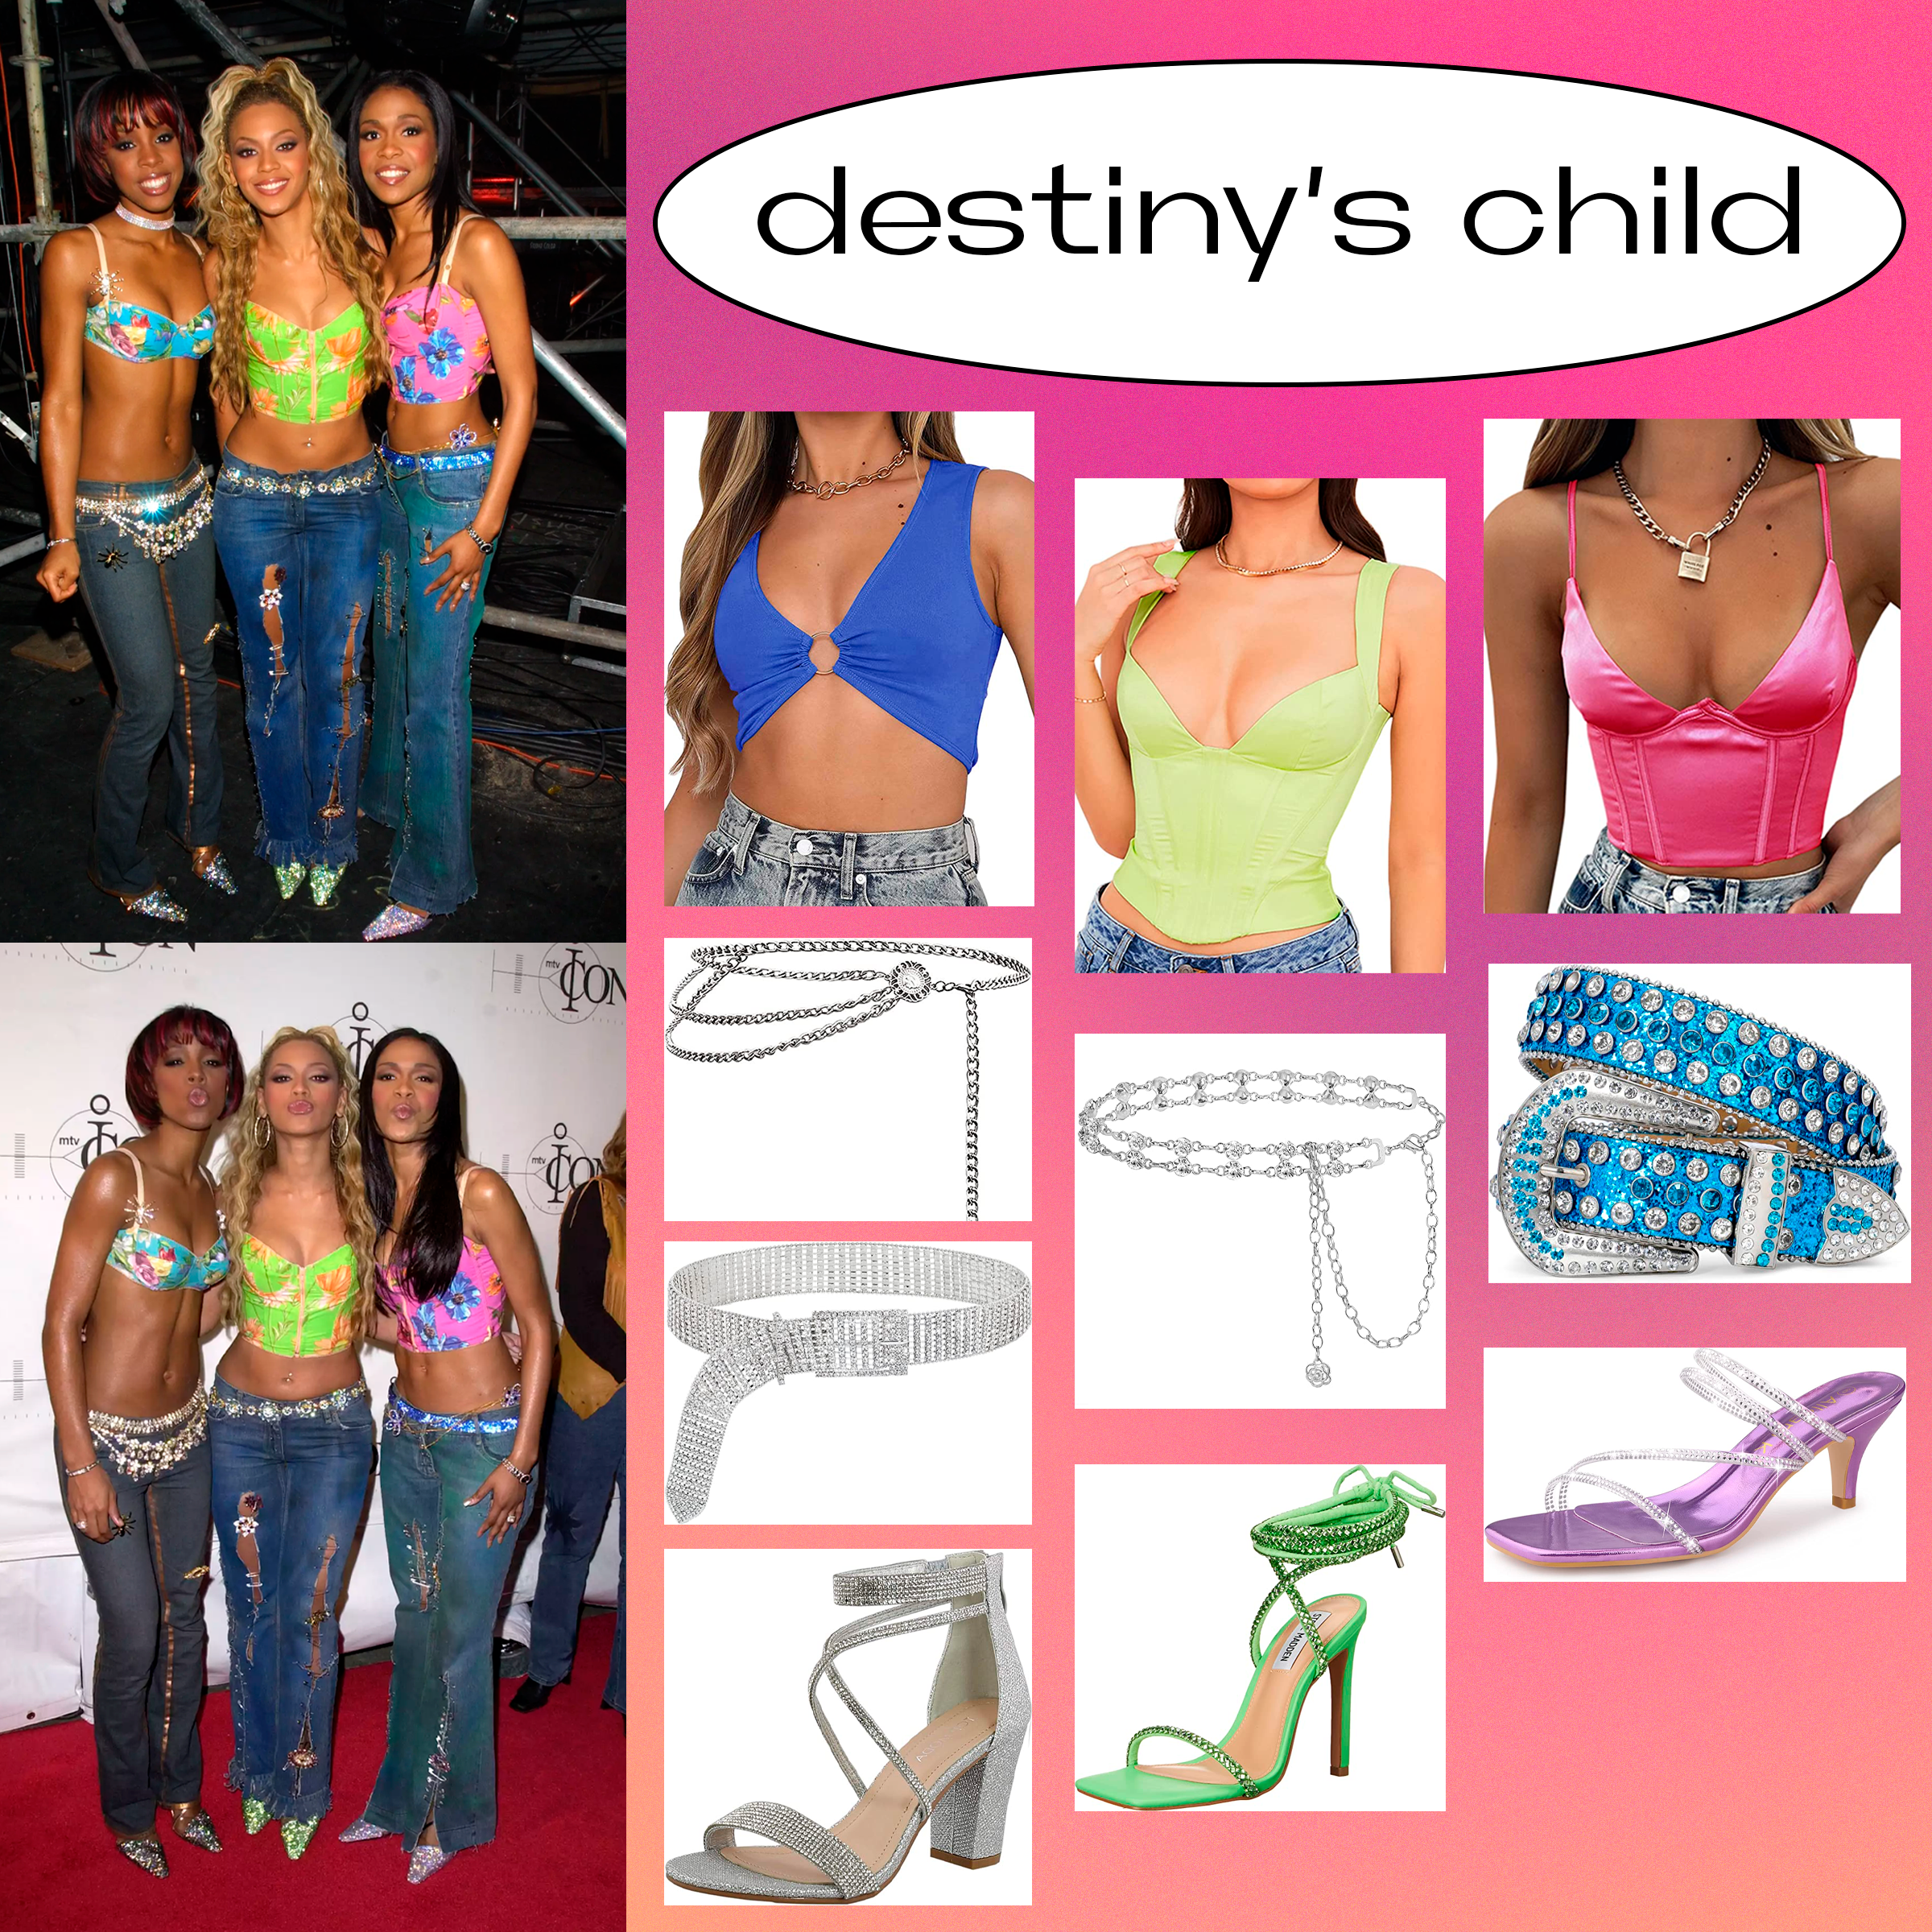 Destiny's Child - MTV Icon red carpet (2001)